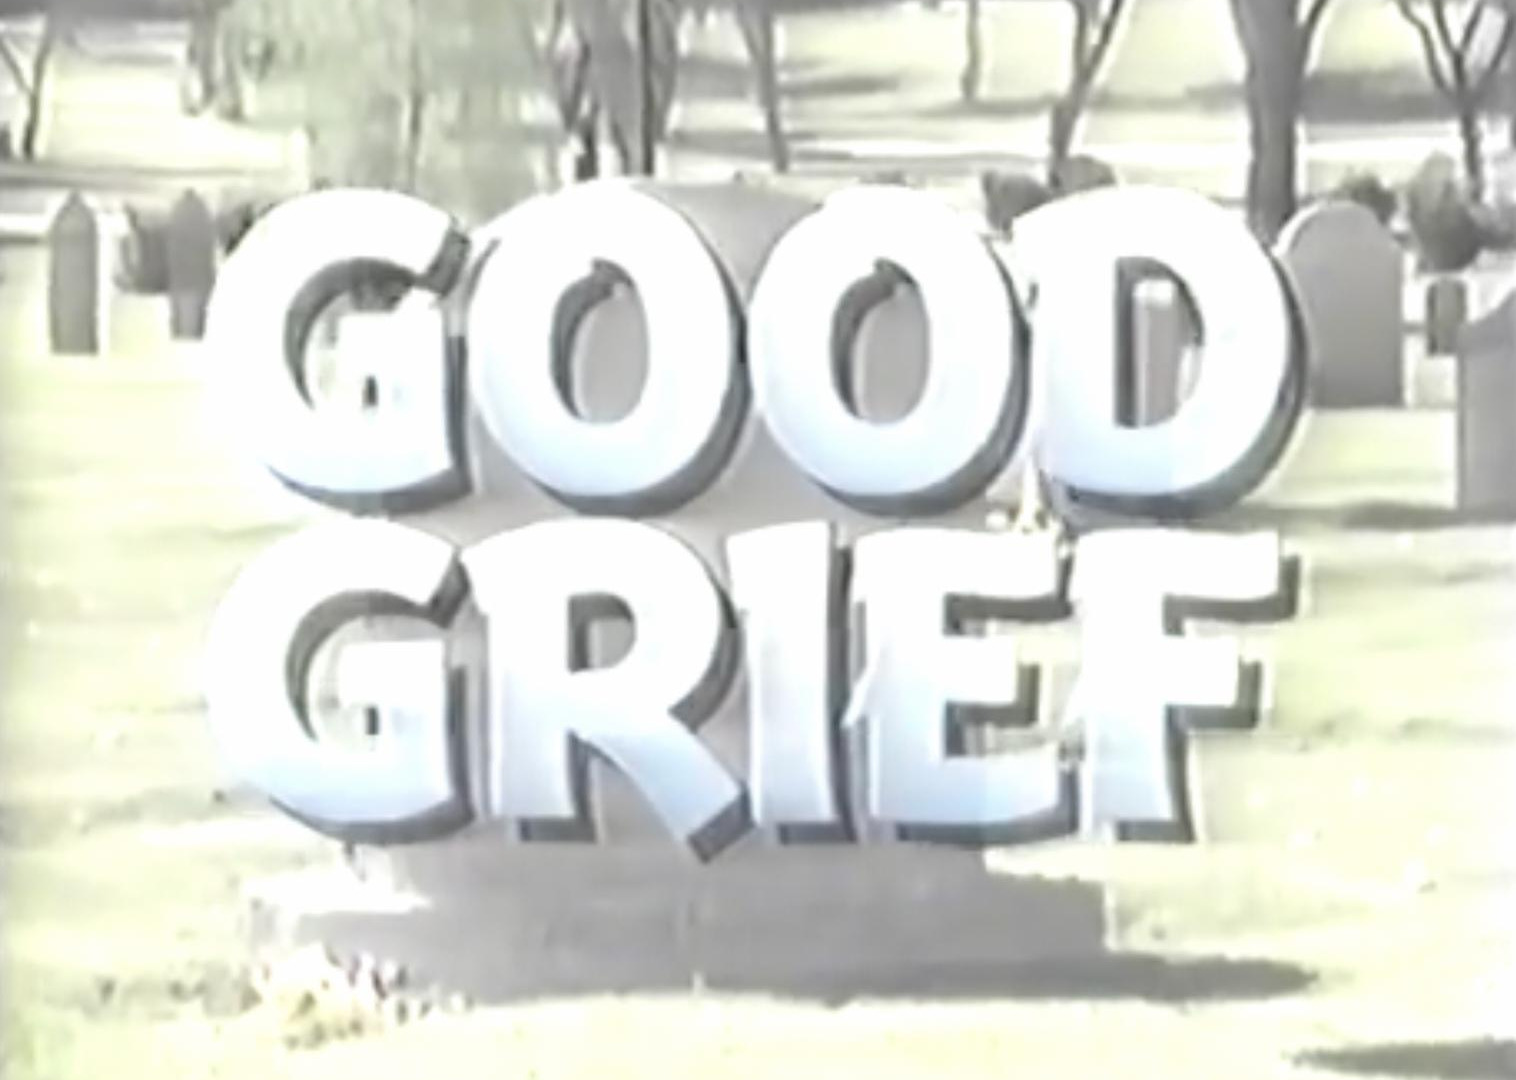 Show Good Grief (1991)